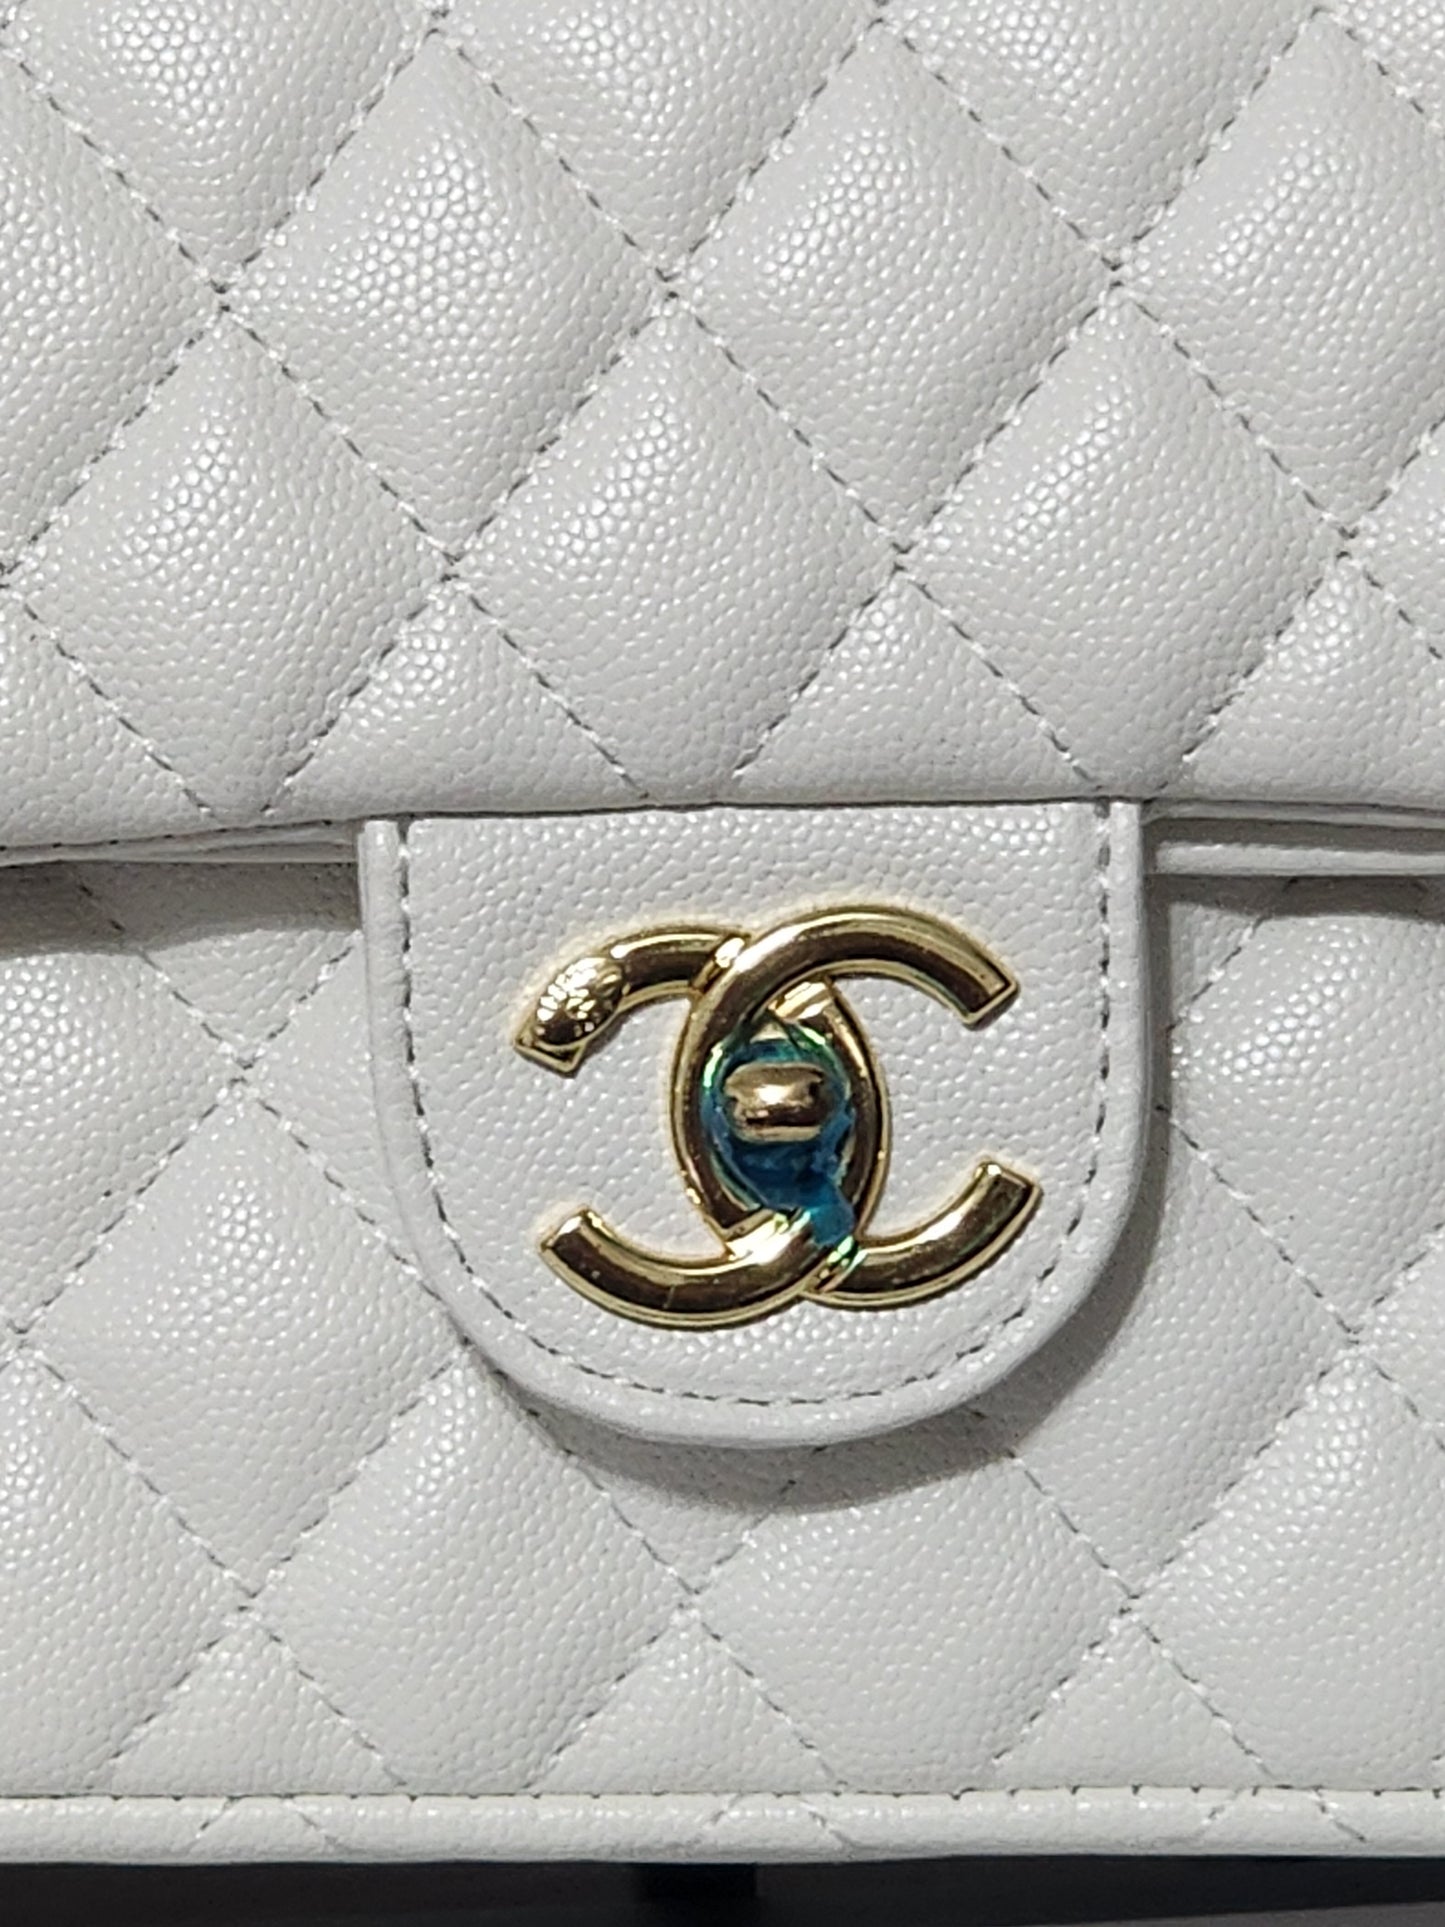 Inspired Caviar Leather Handbags